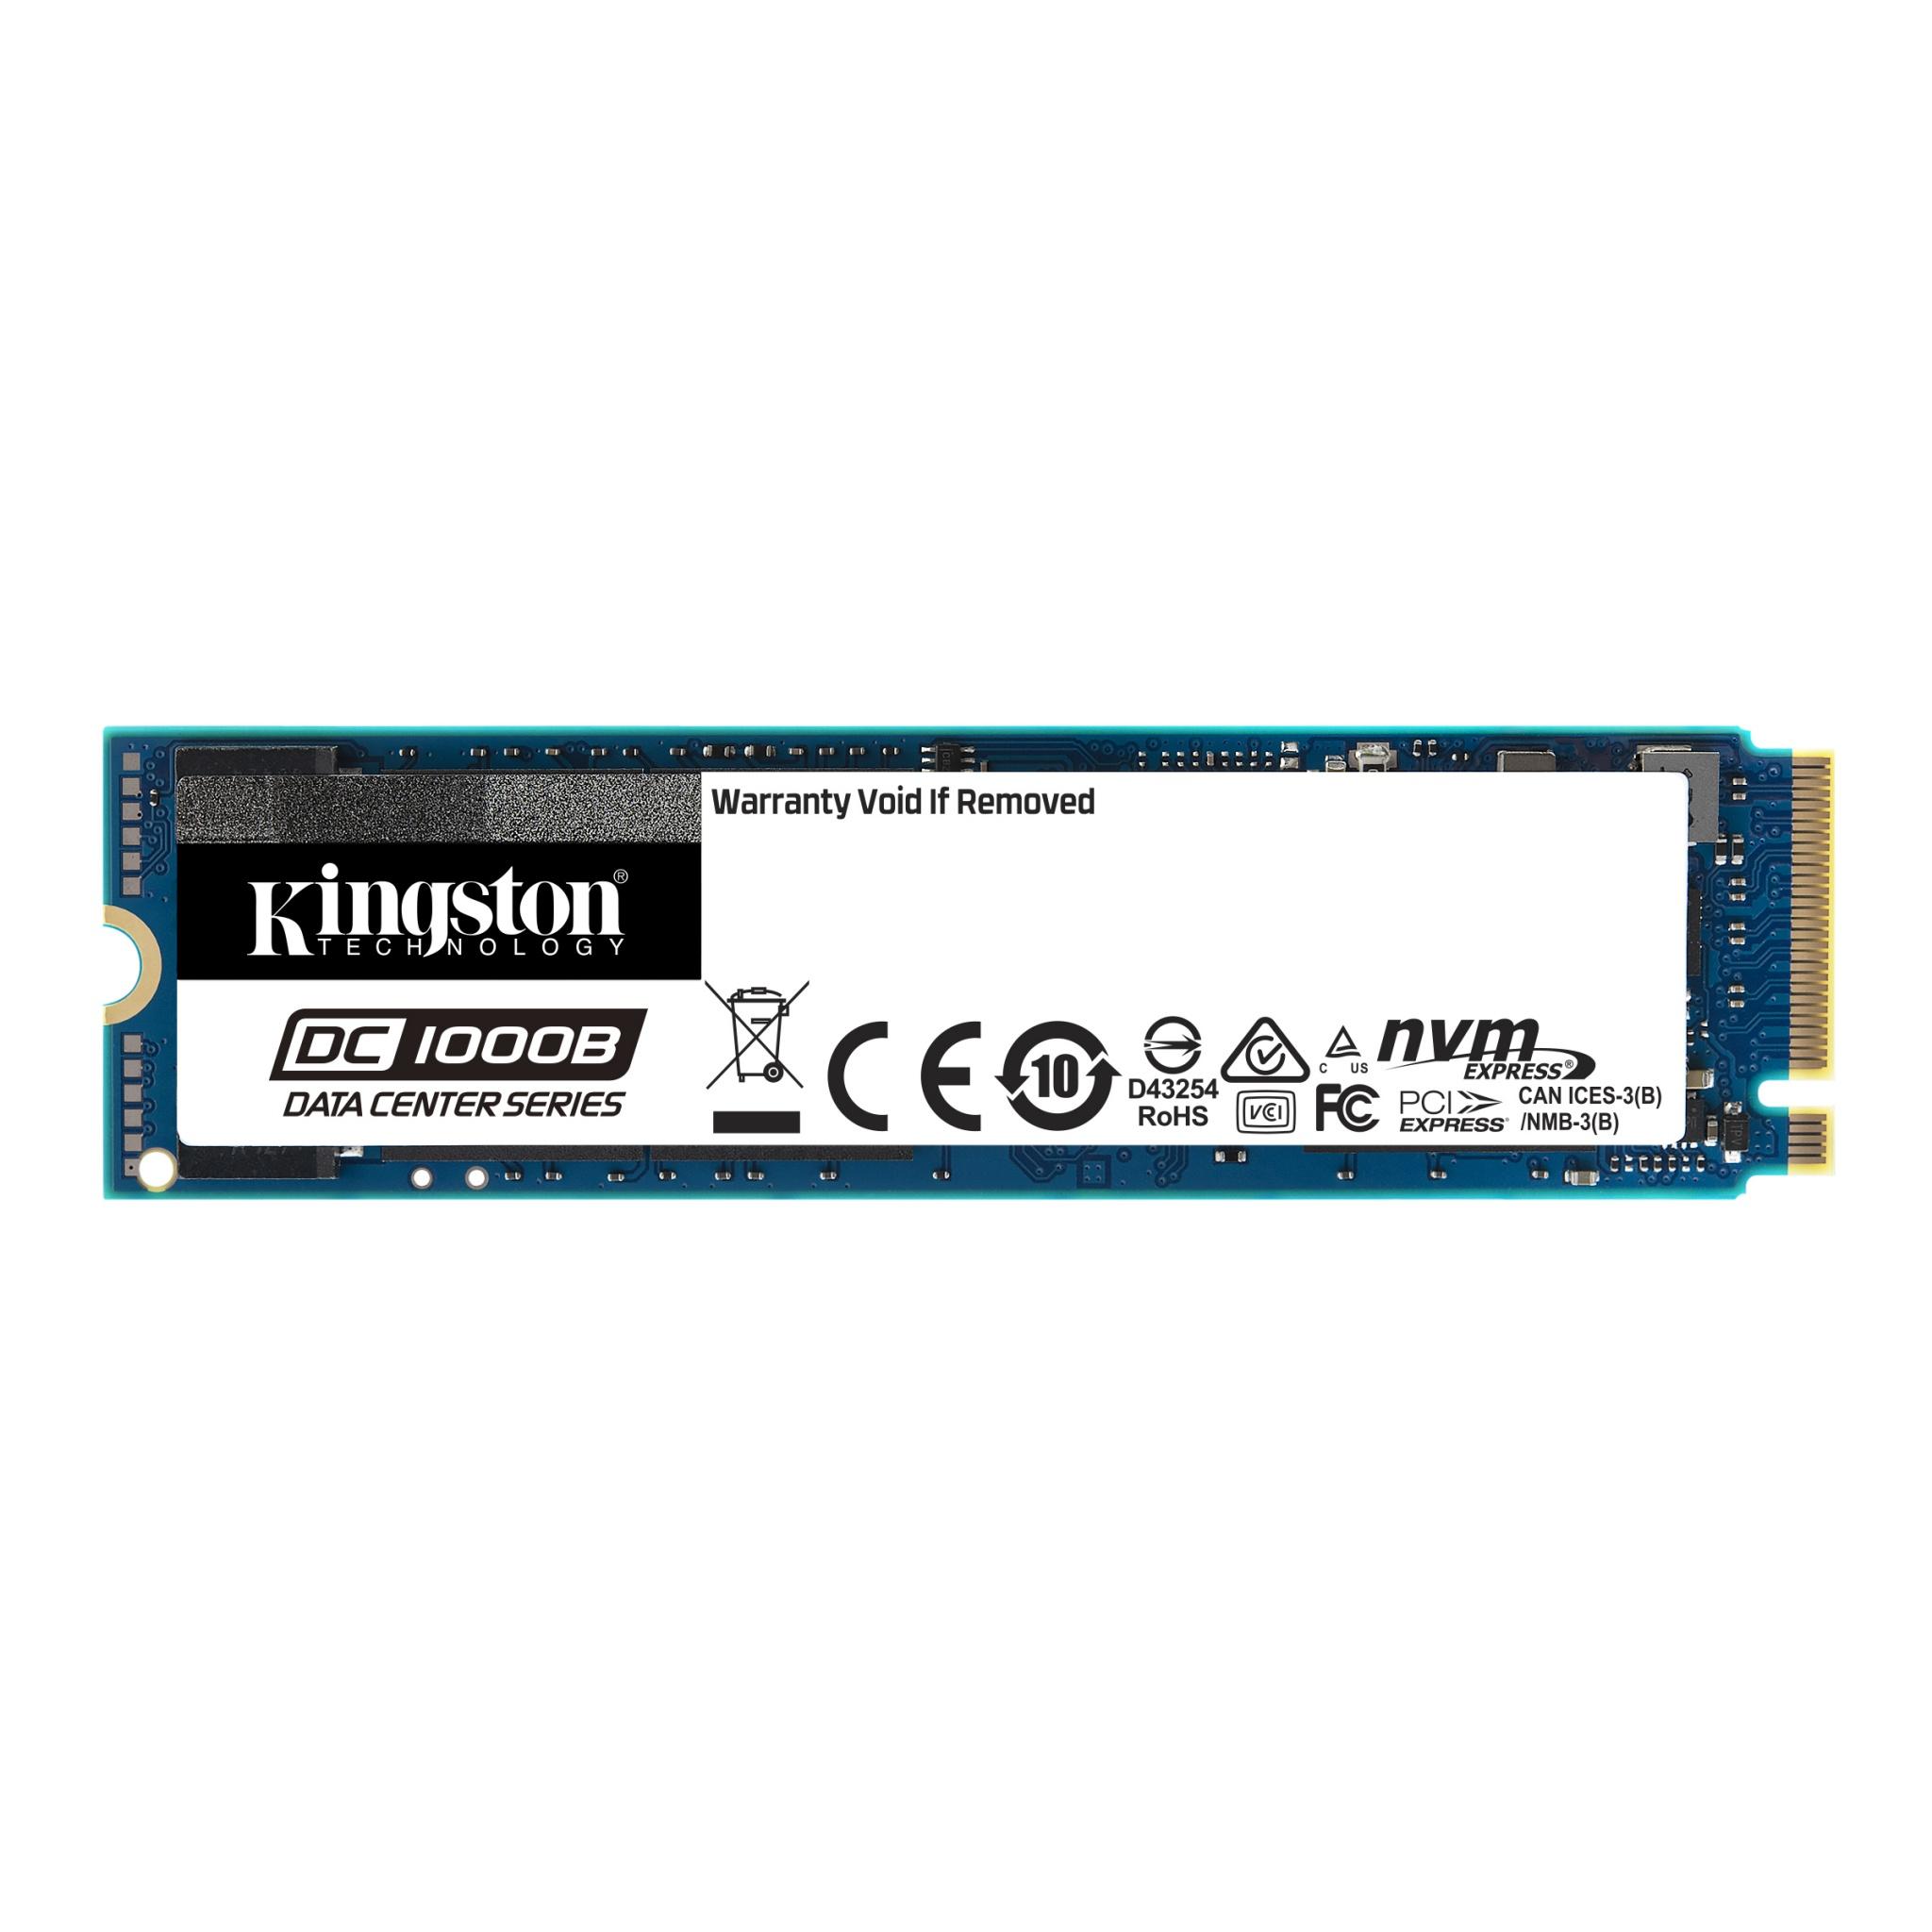 Ổ cứng SSD Kingston DC1000B 240GB M.2-2280 PCIe 3.0 X4 NVME slide image 0